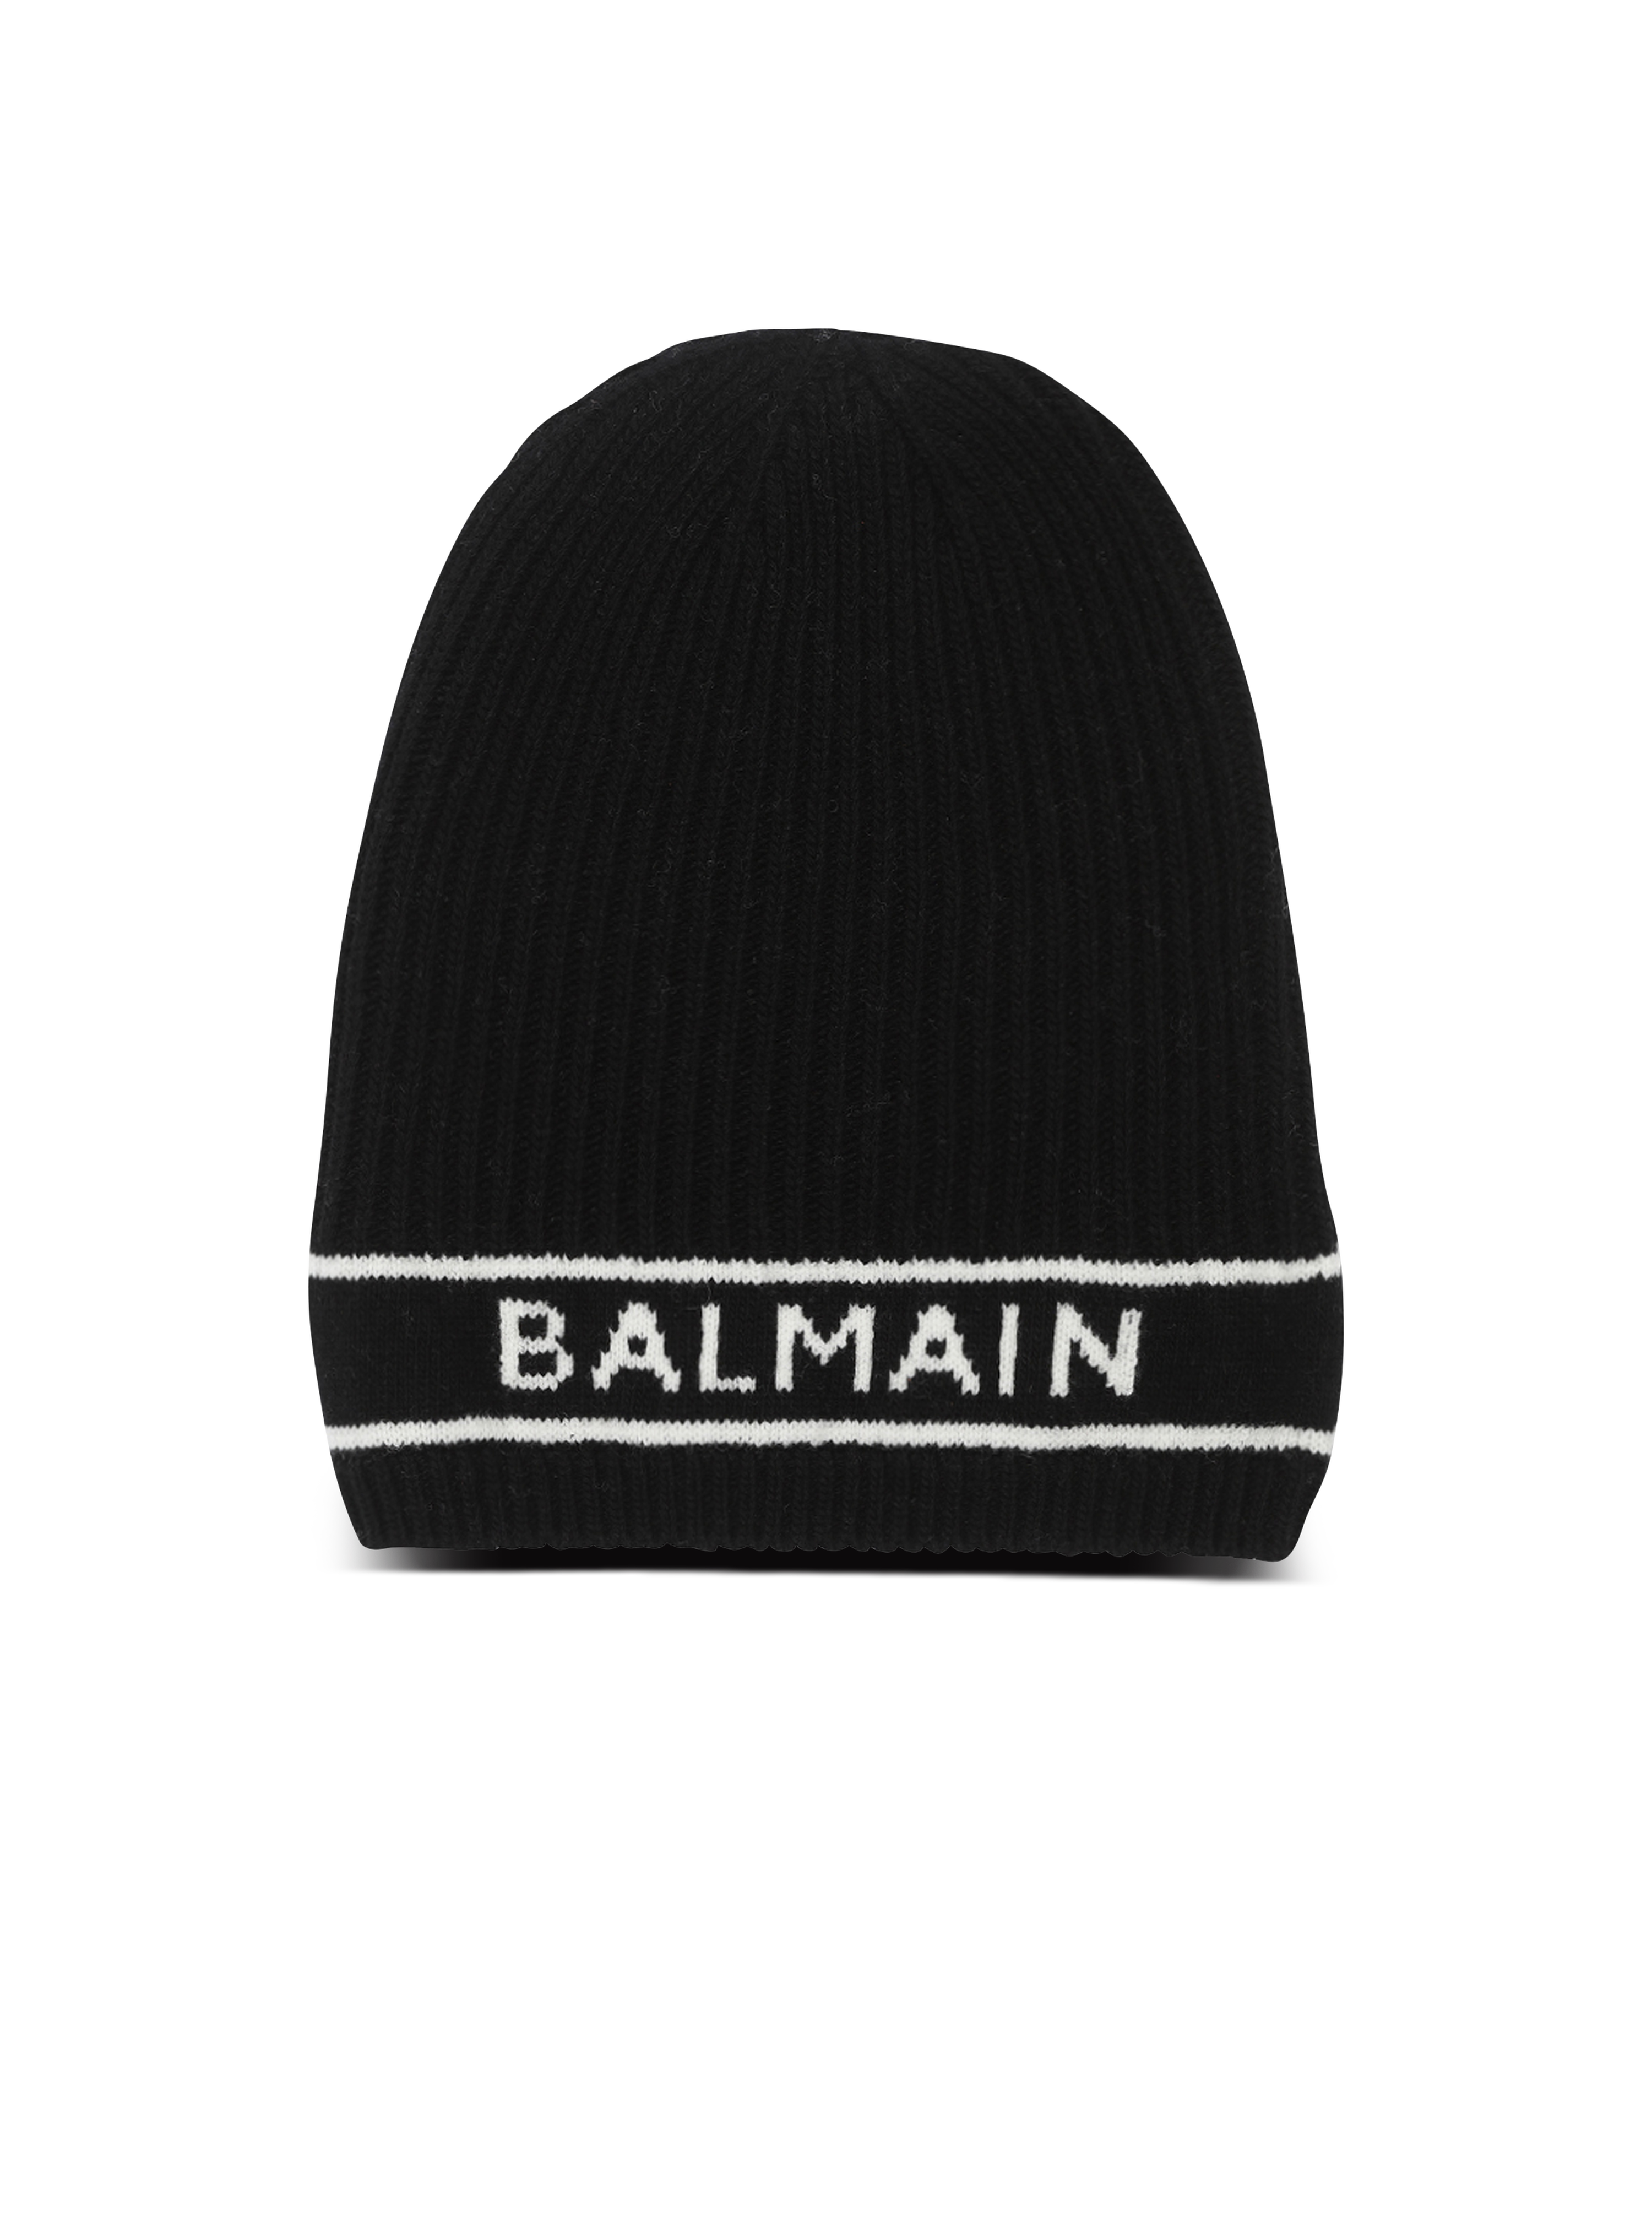 Wool beanie with embroidered Balmain logo, black, hi-res